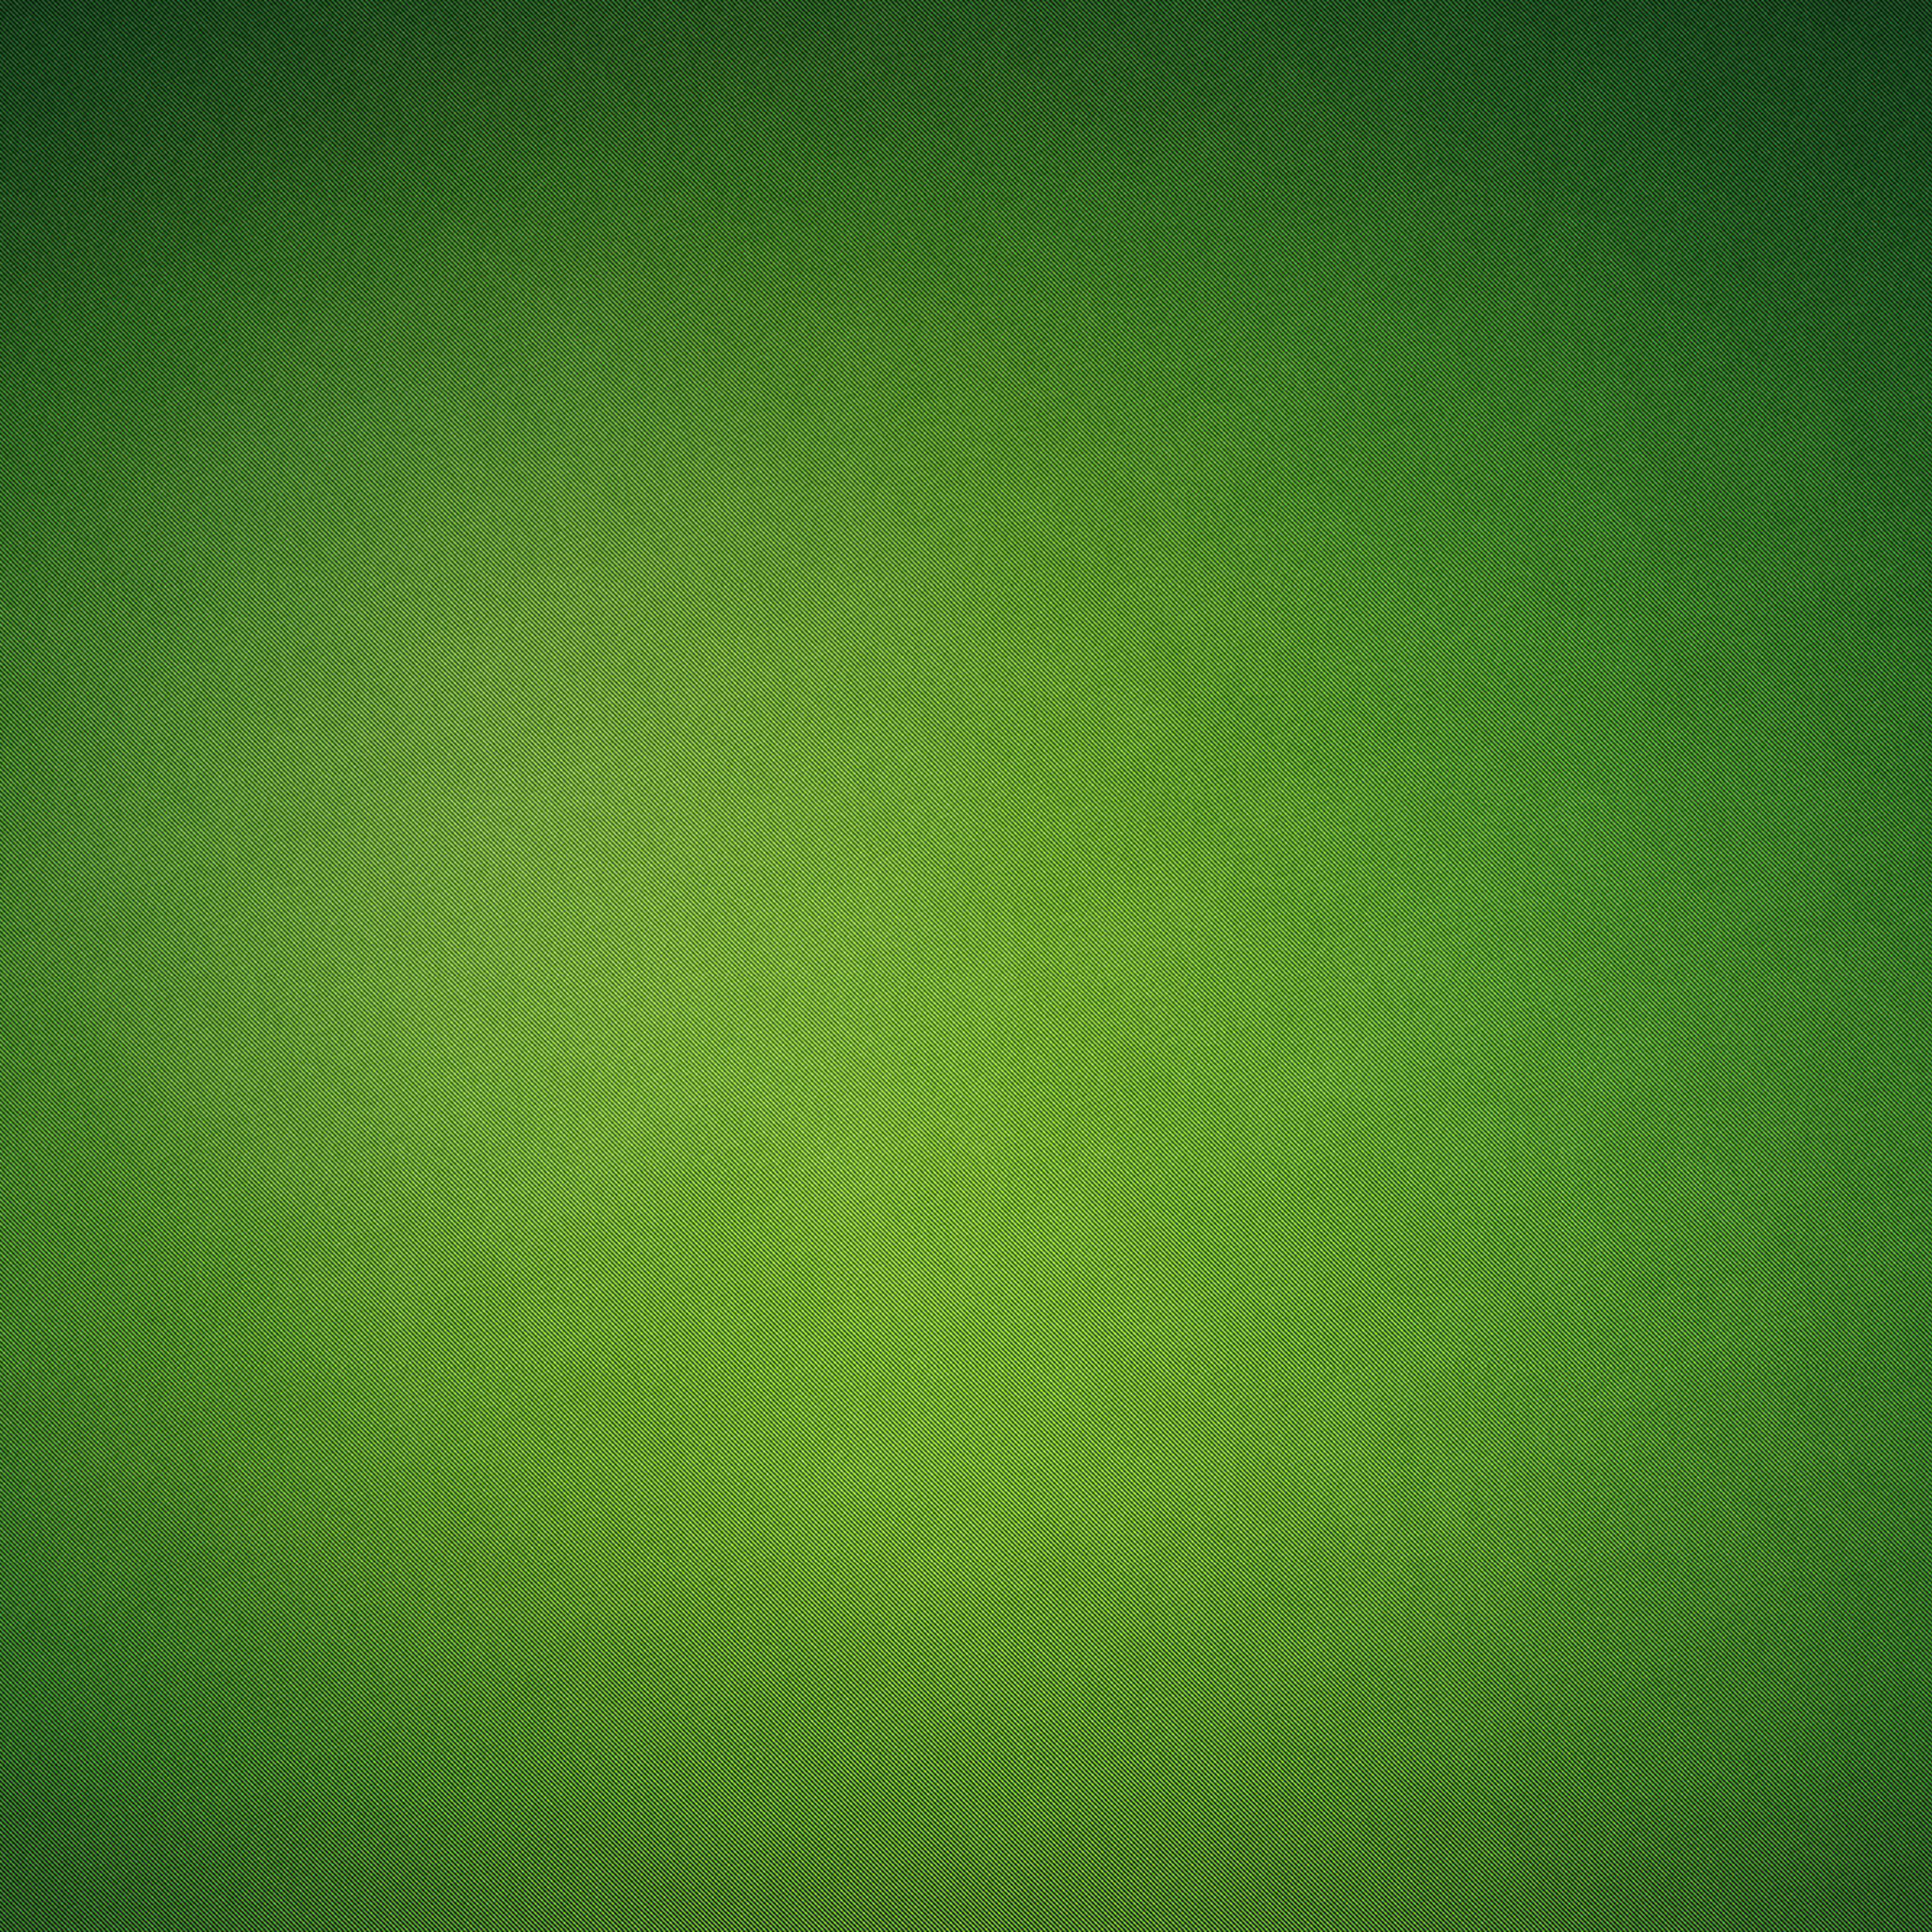 Green Ipad Wallpapers